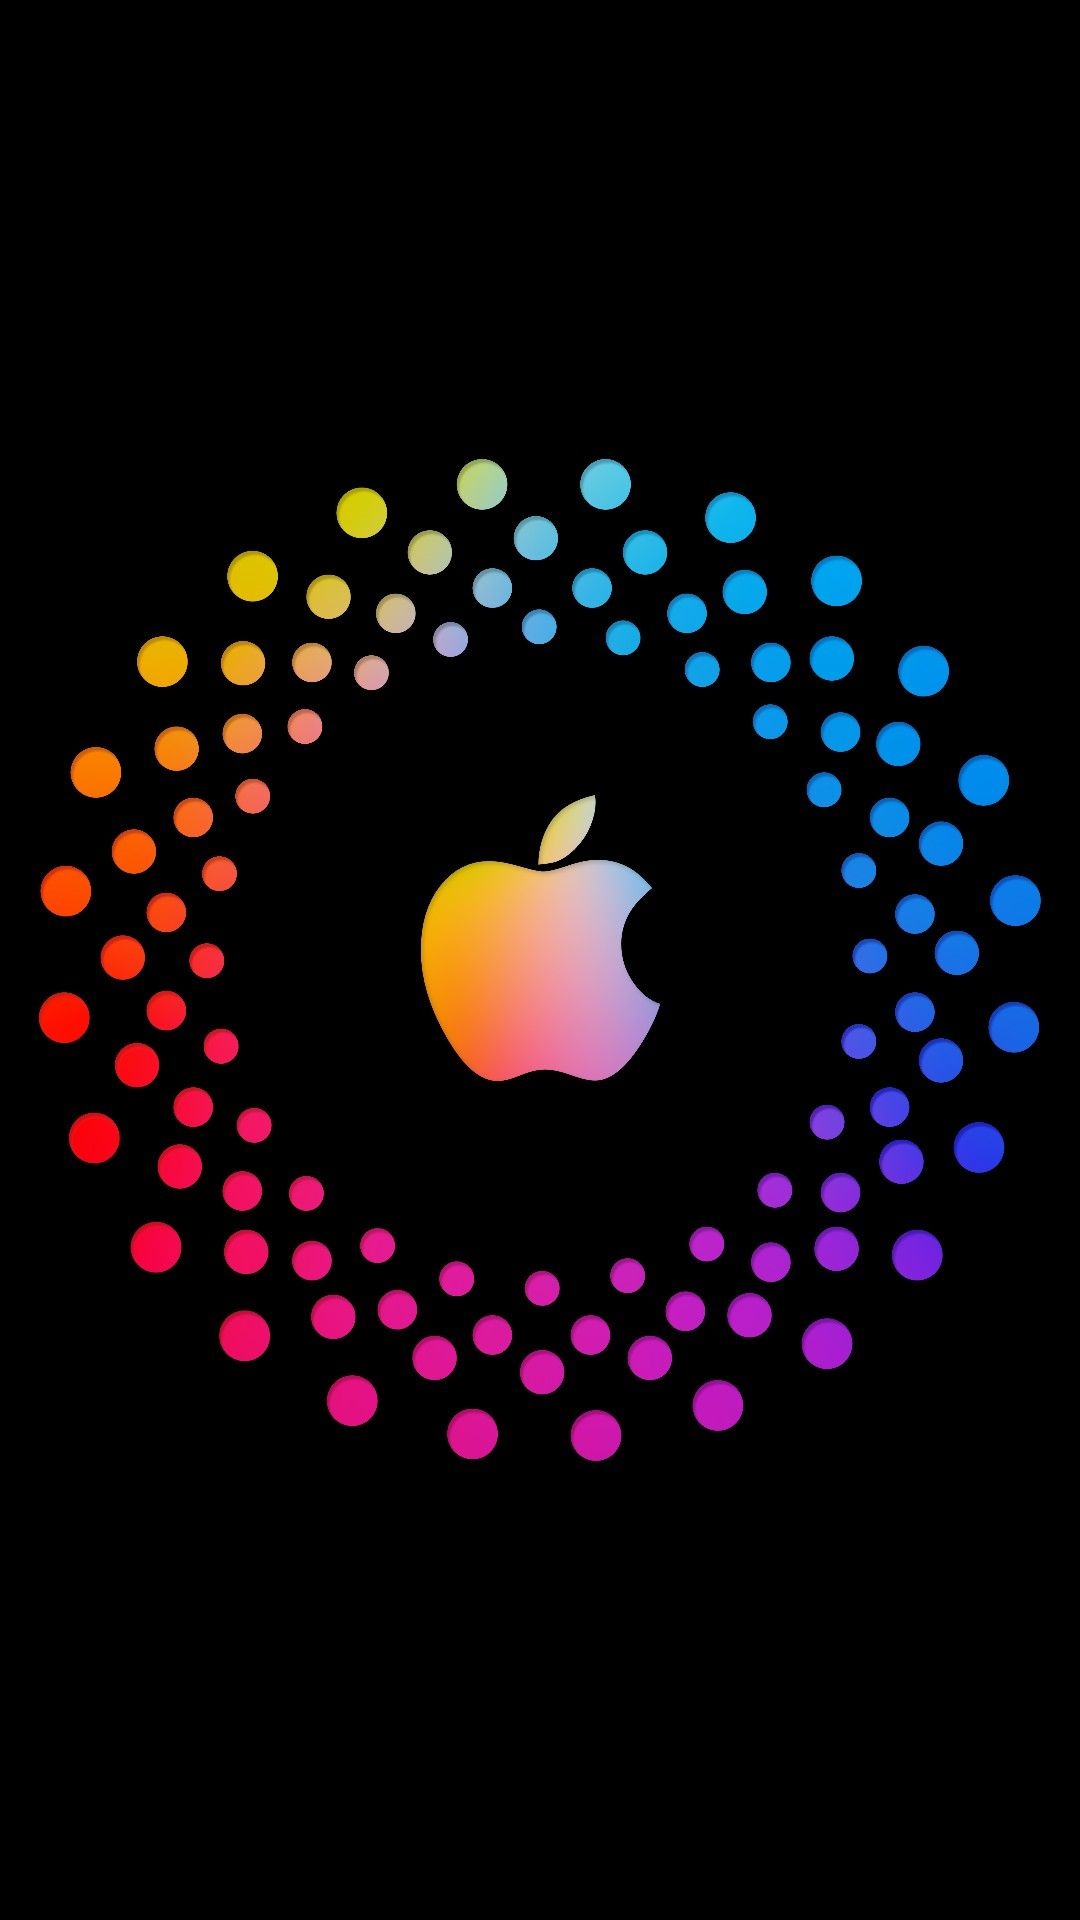 Apple logo, Distinctive branding, Creative interpretations, Unique wallpapers, 1080x1920 Full HD Handy